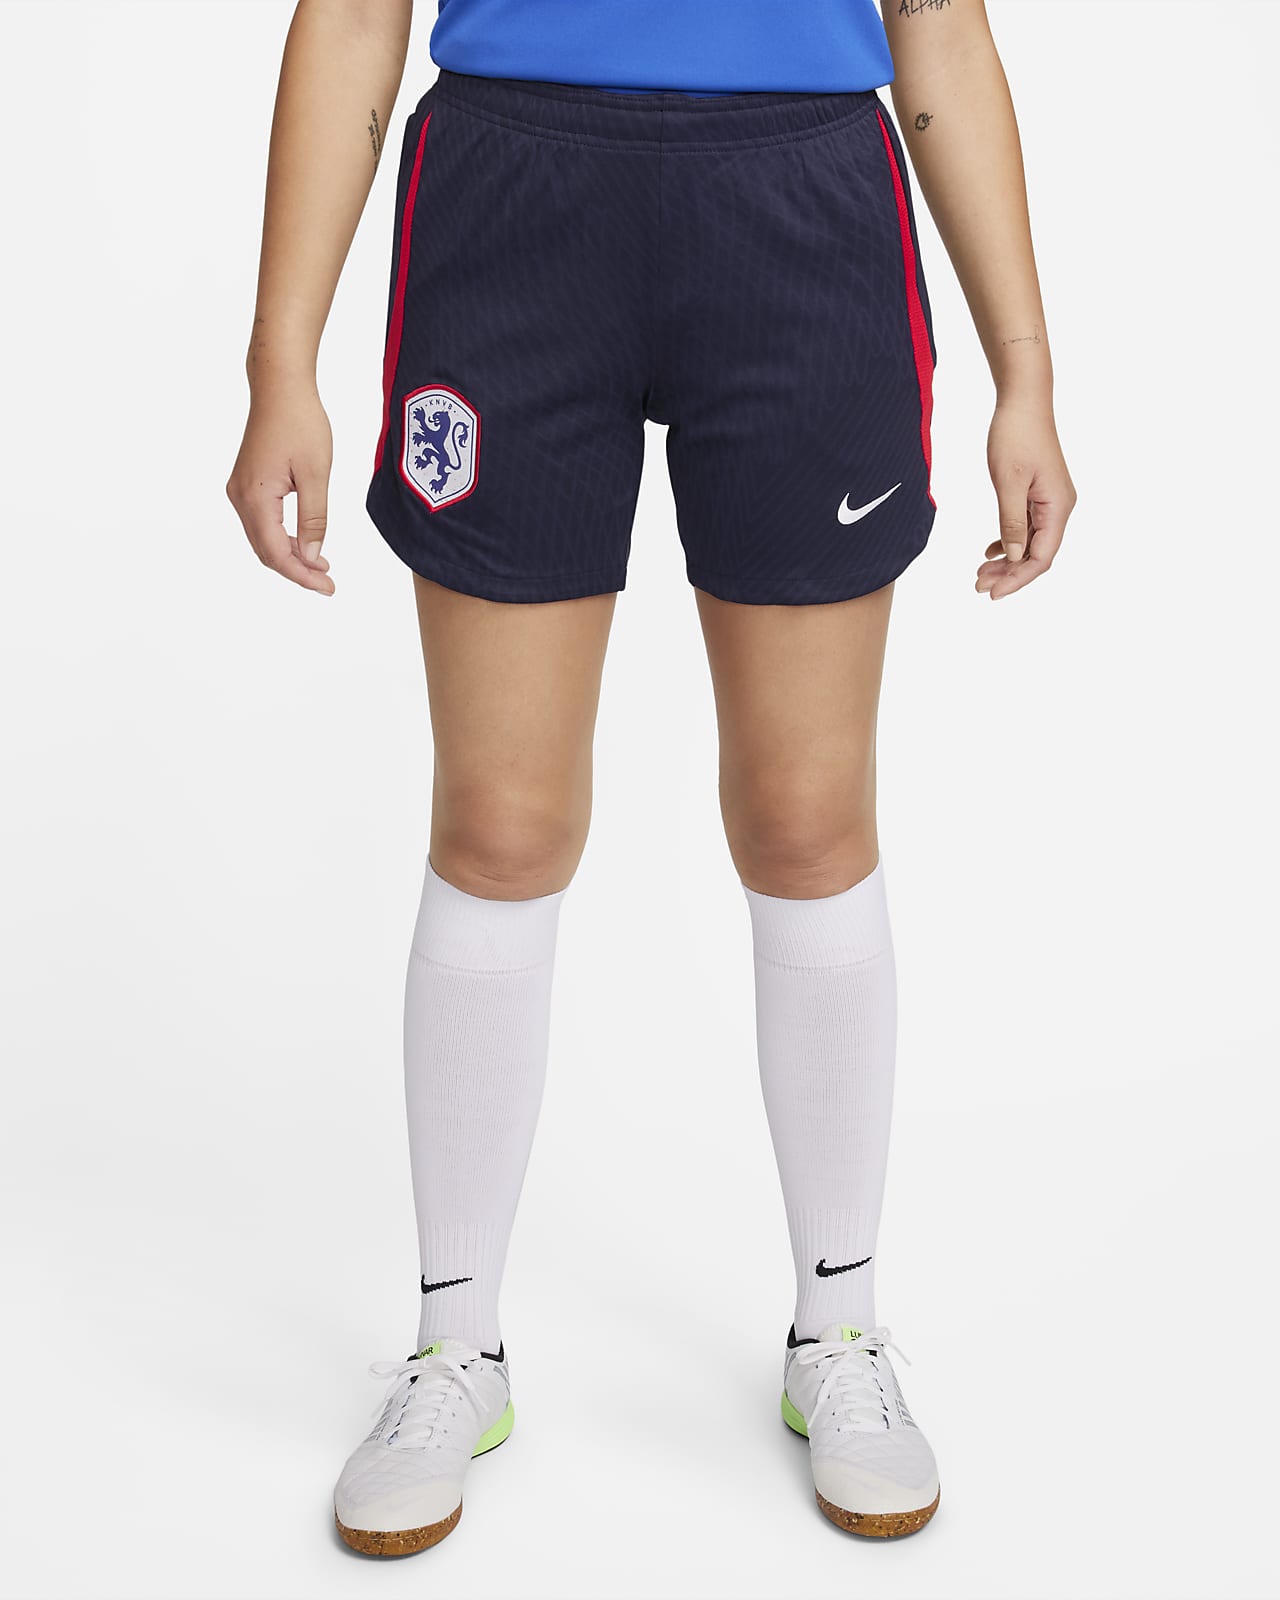 Women's White Shorts. Nike UK